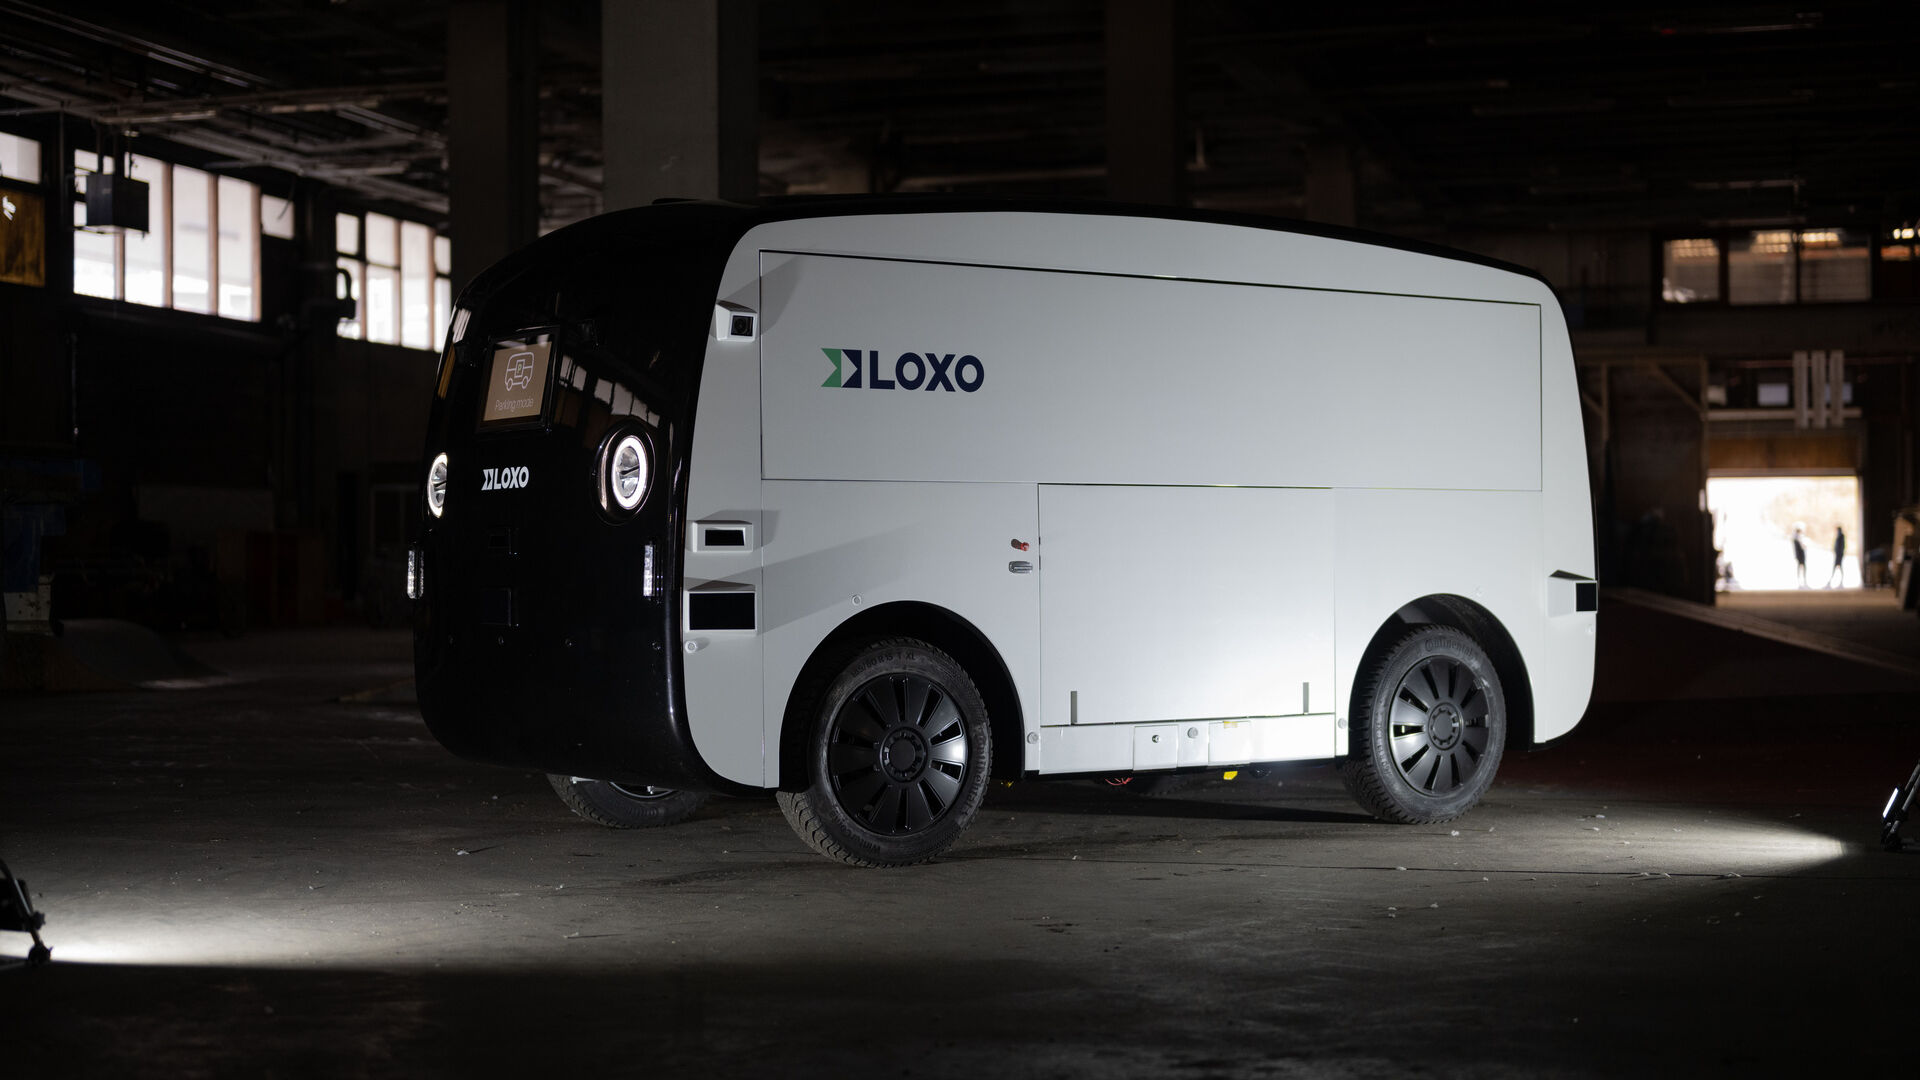 LOXO: Alpha هي شاحنة ذاتية القيادة مصنوعة بالكامل في سويسرا وتم تقديمها في 6 ديسمبر 2022 في Kursaal في برن خلال مؤتمر صحفي من قبل شركة LOXO الناشئة